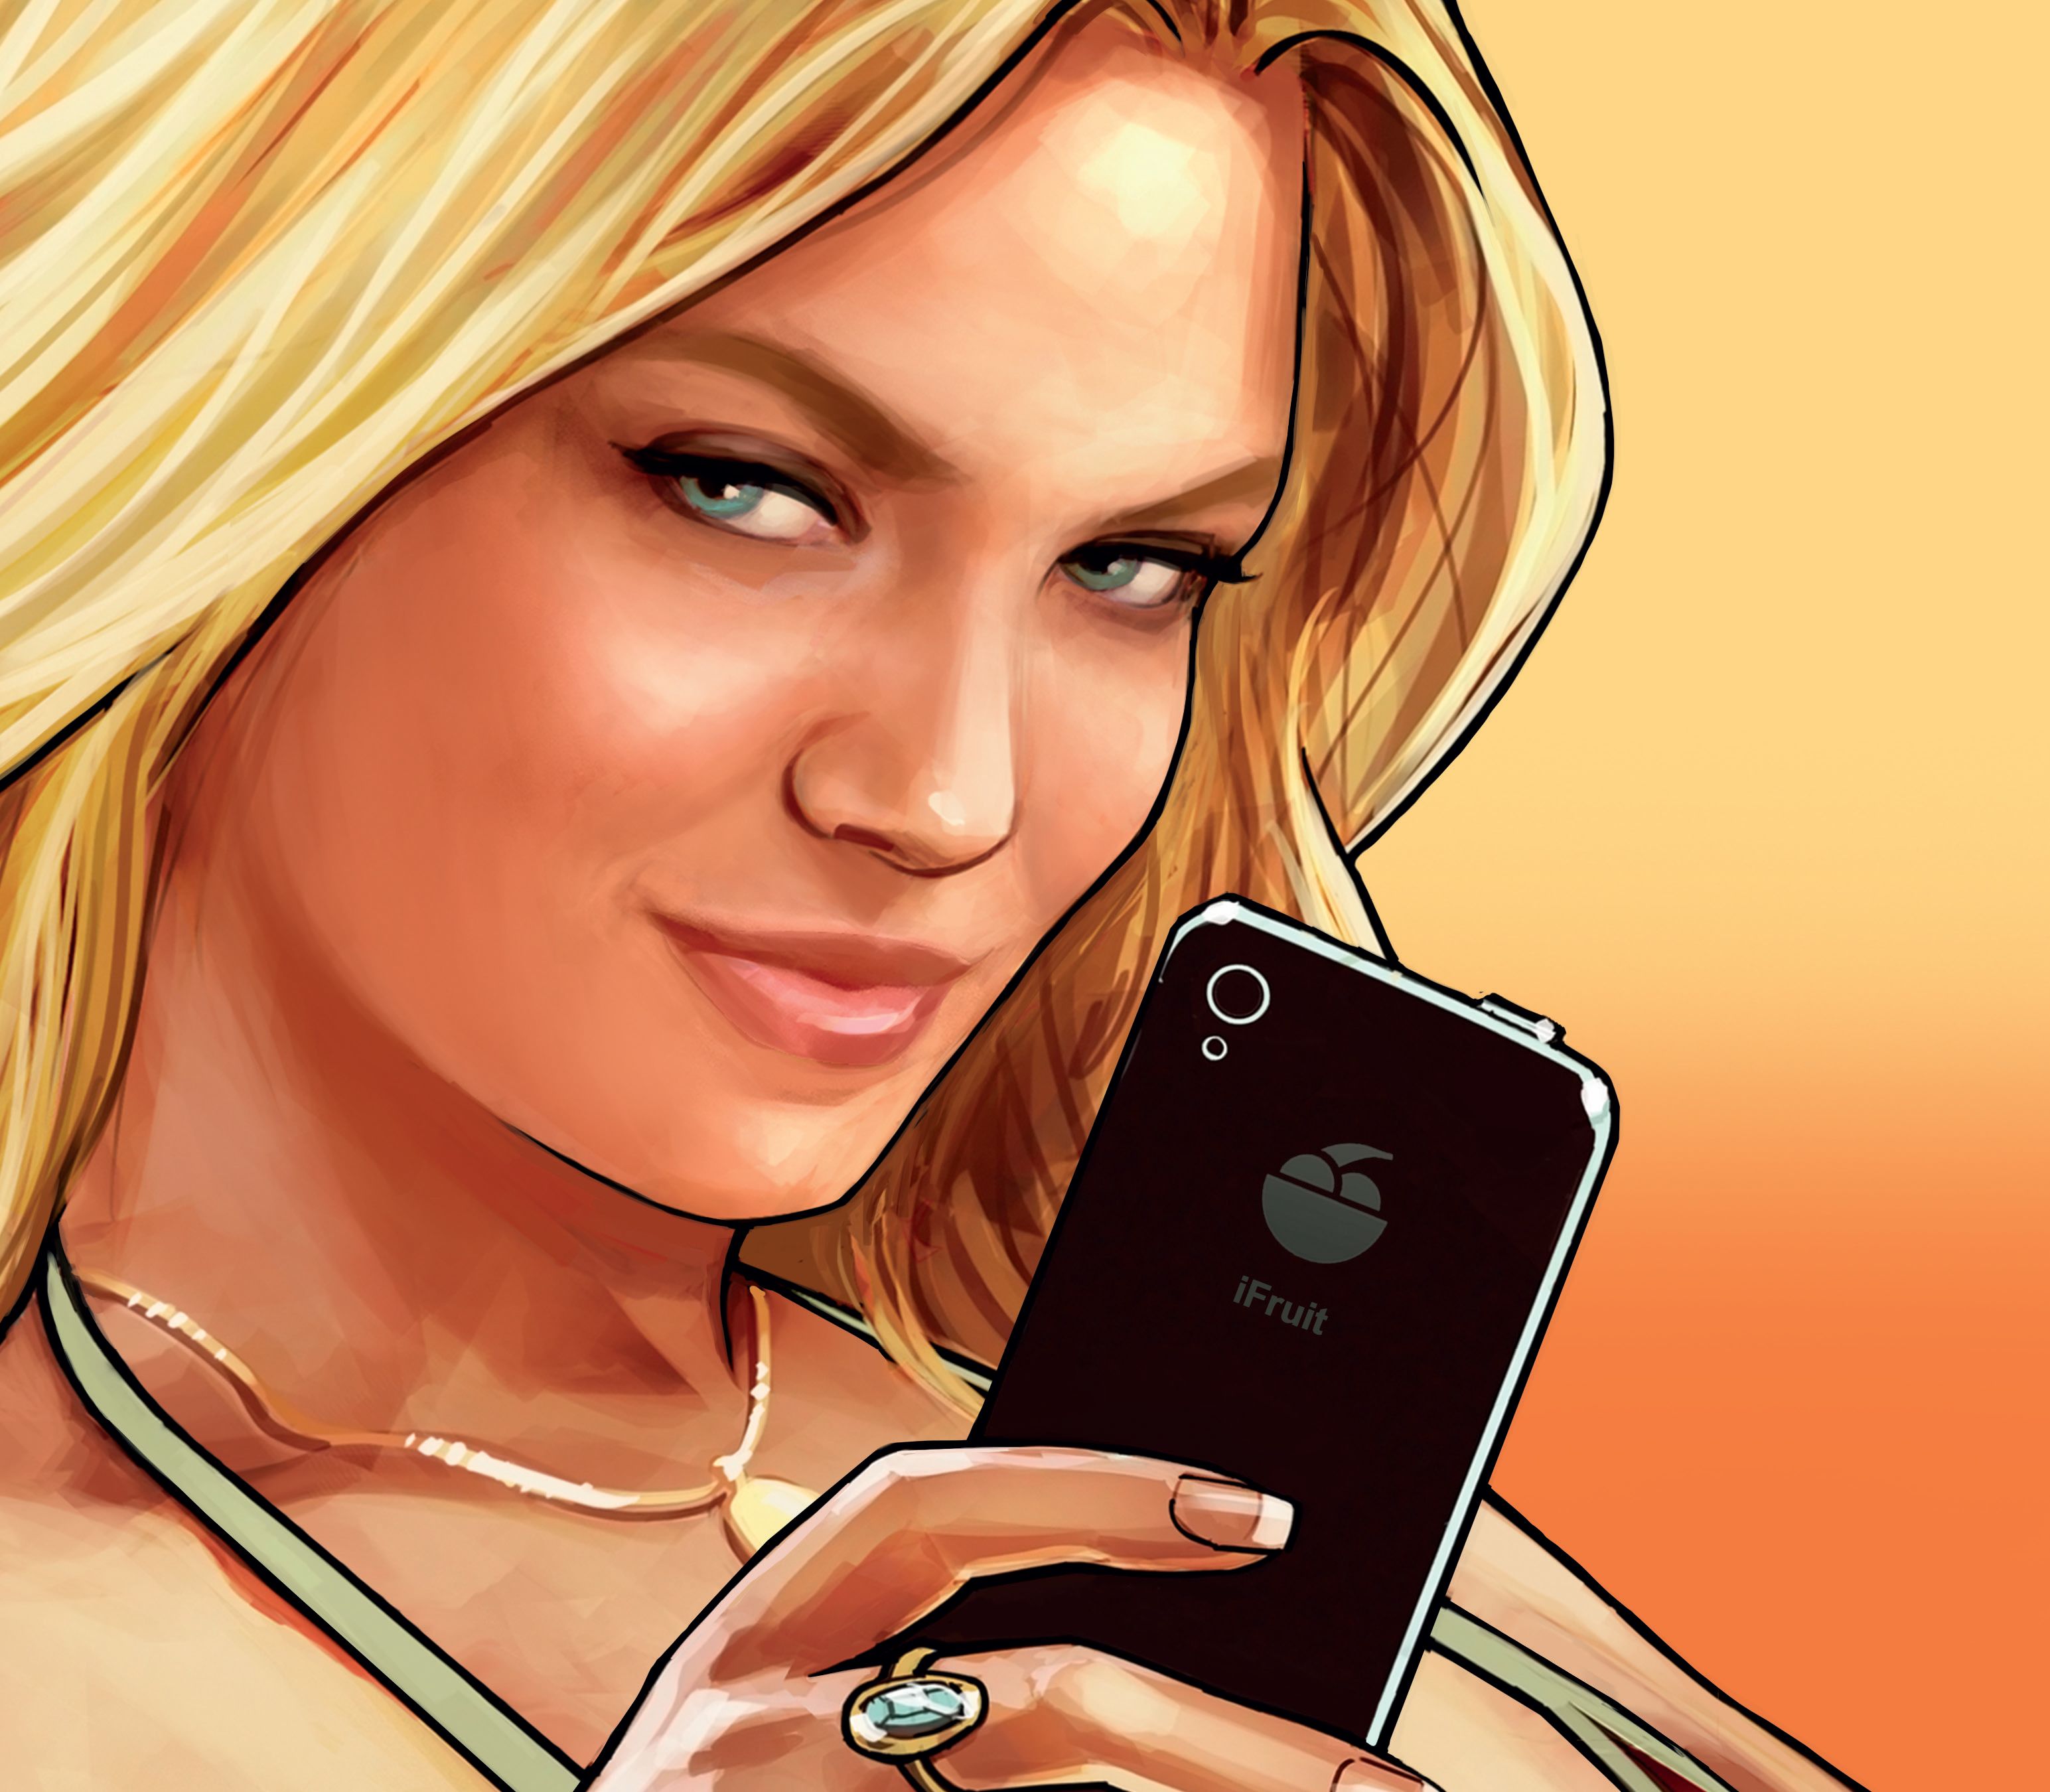 image GTA 5 Blonde girl Smartphone Face Girls Games 3089x2700